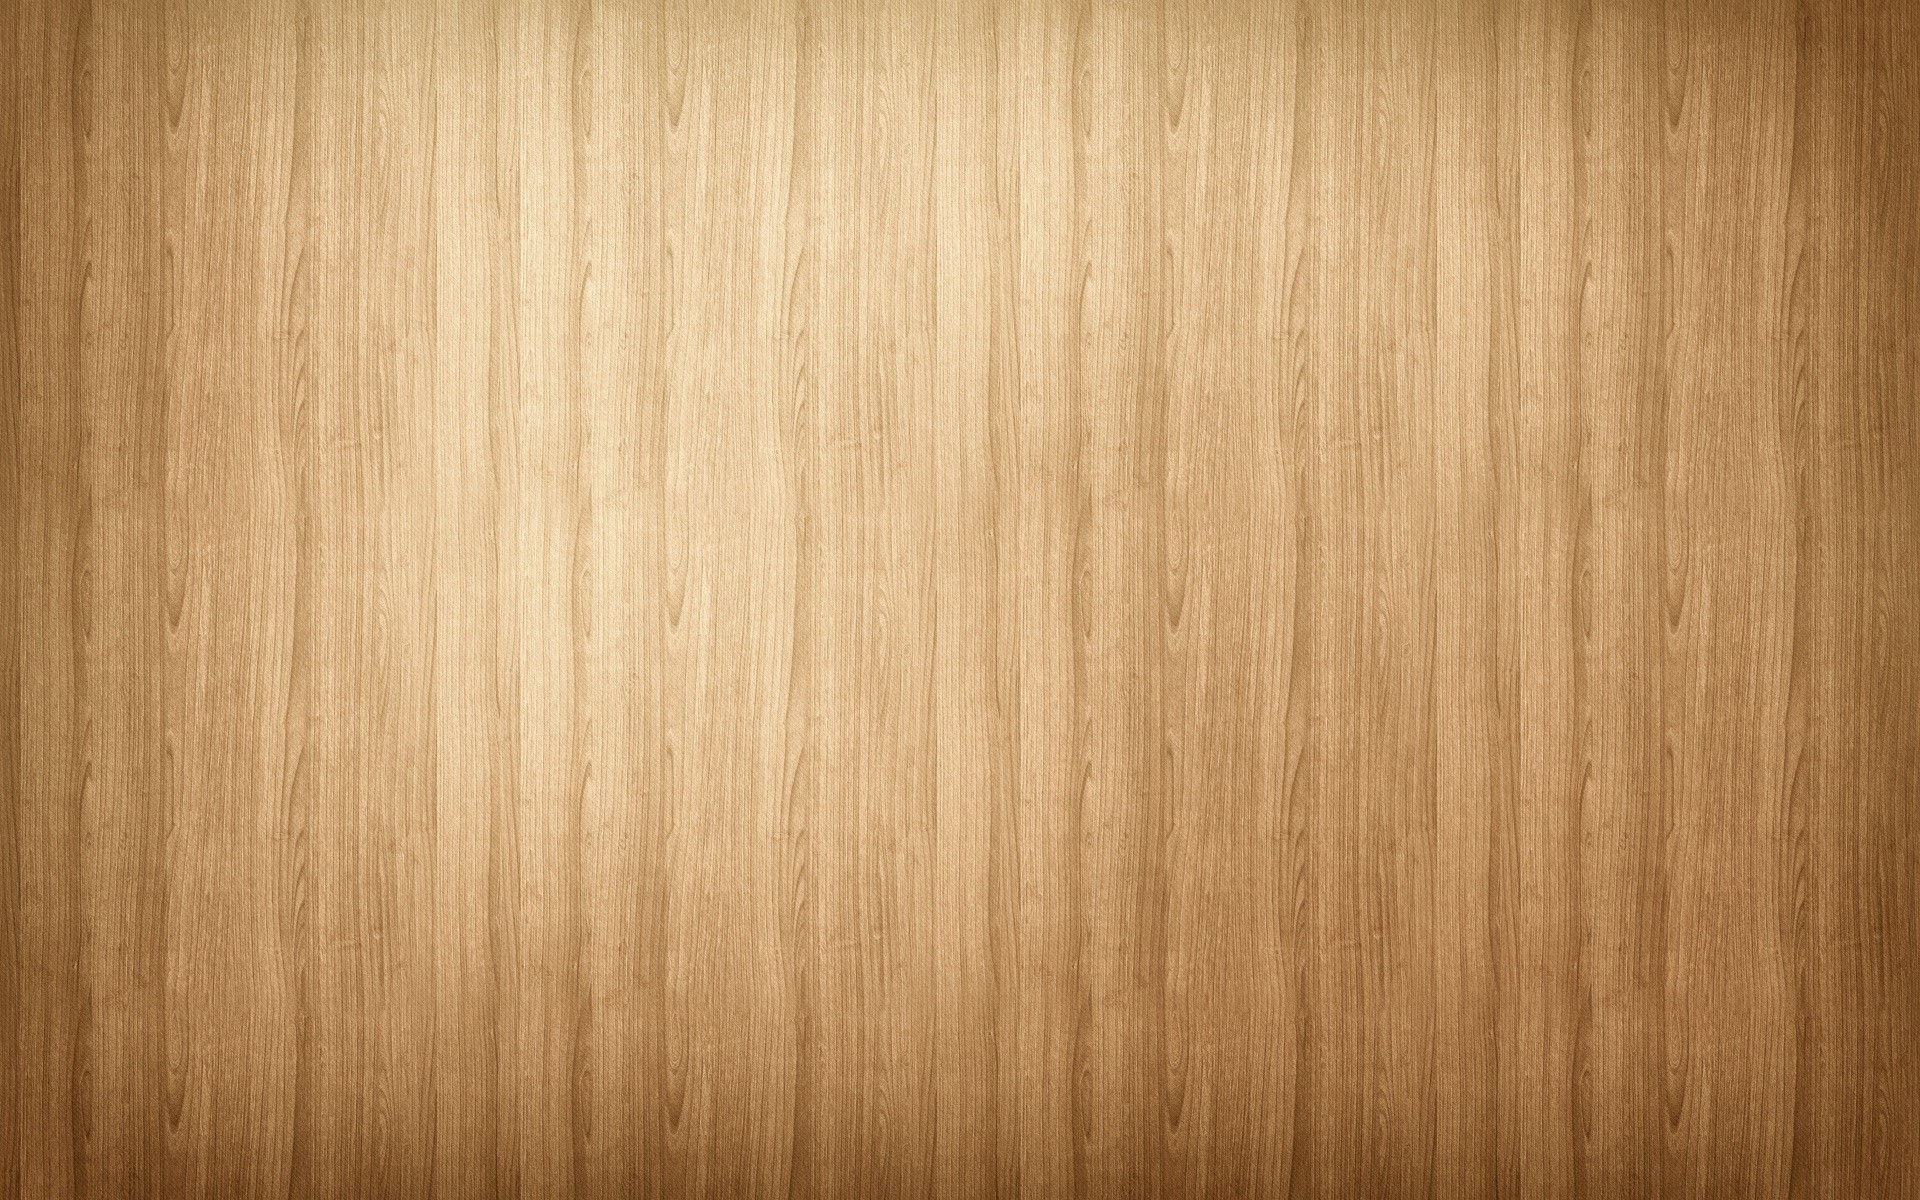 1920x1200 Light wood wallpaper background HD.